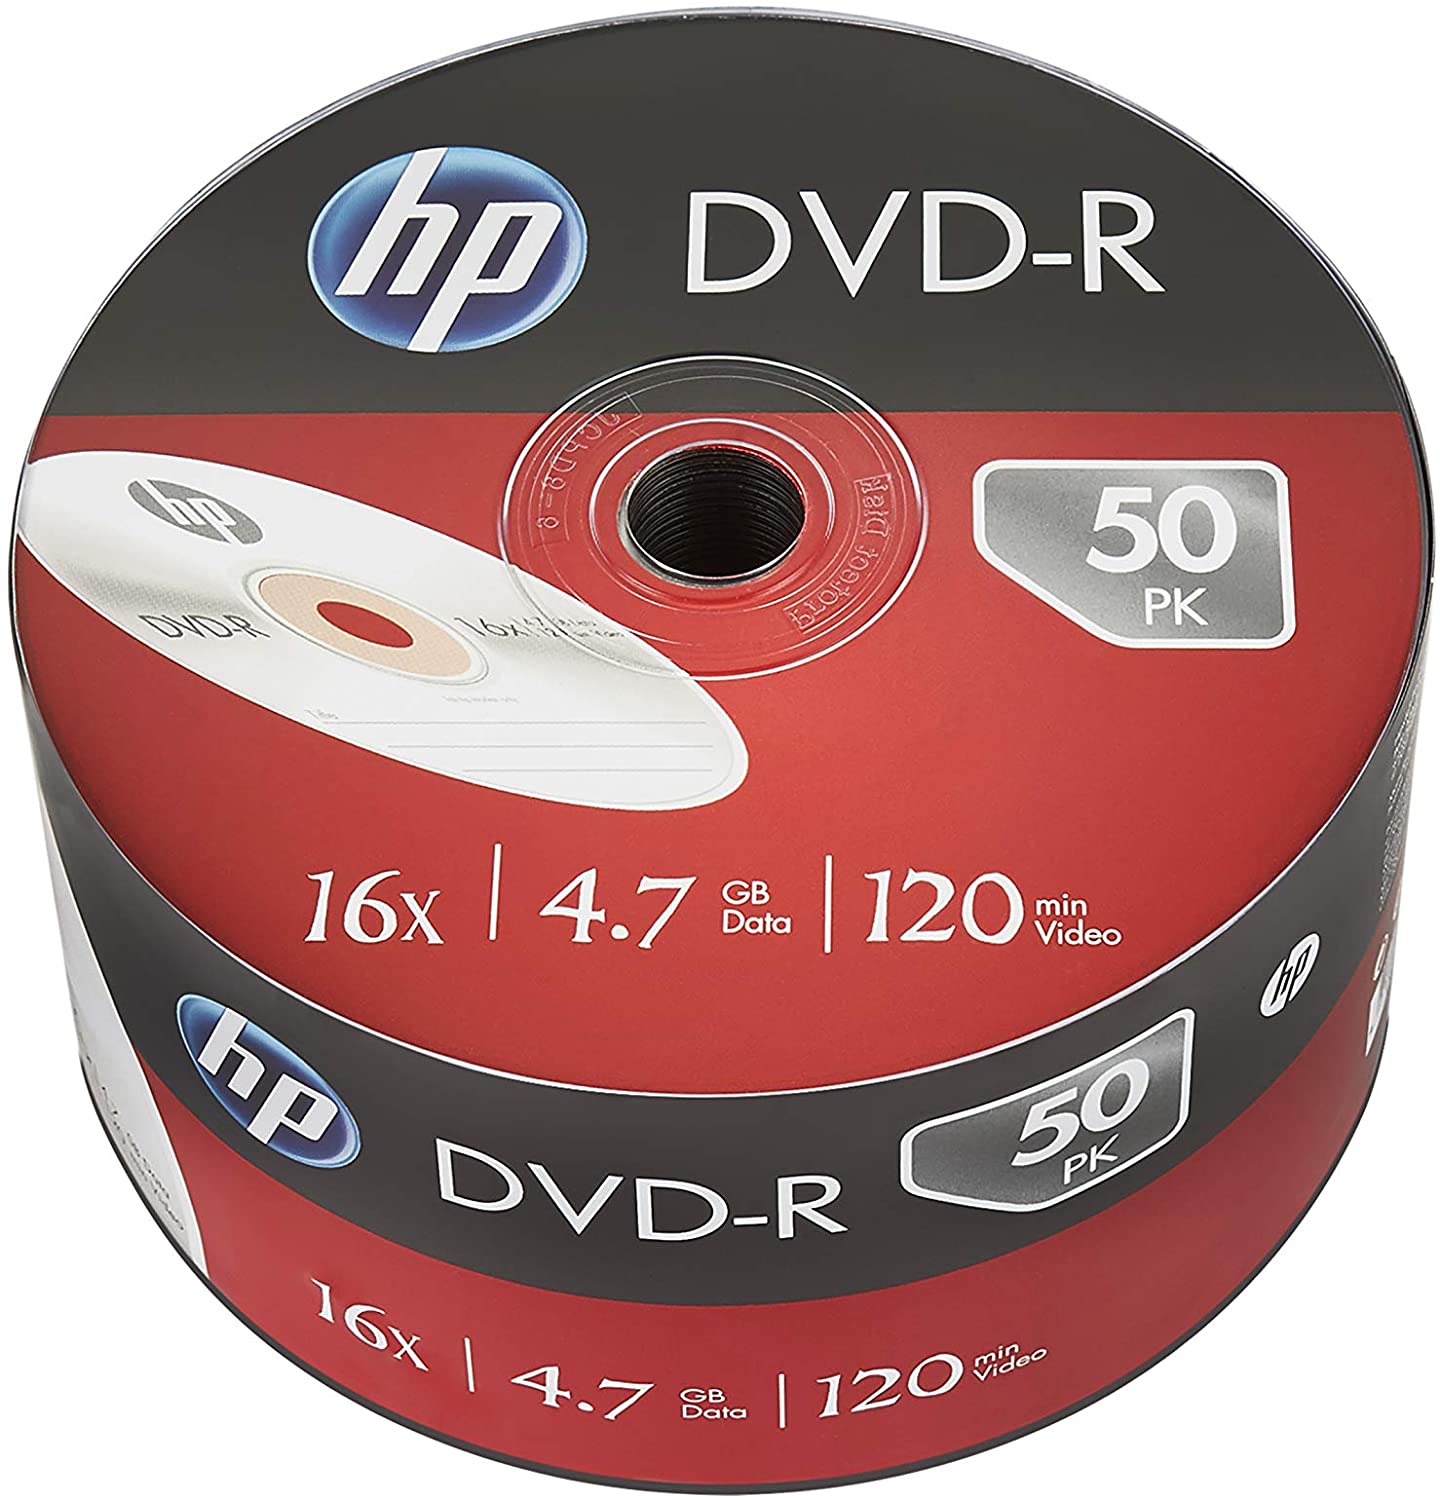 Boite de 50 DVD-R 16x HP - Fourniture bureau Tanger, Maroc